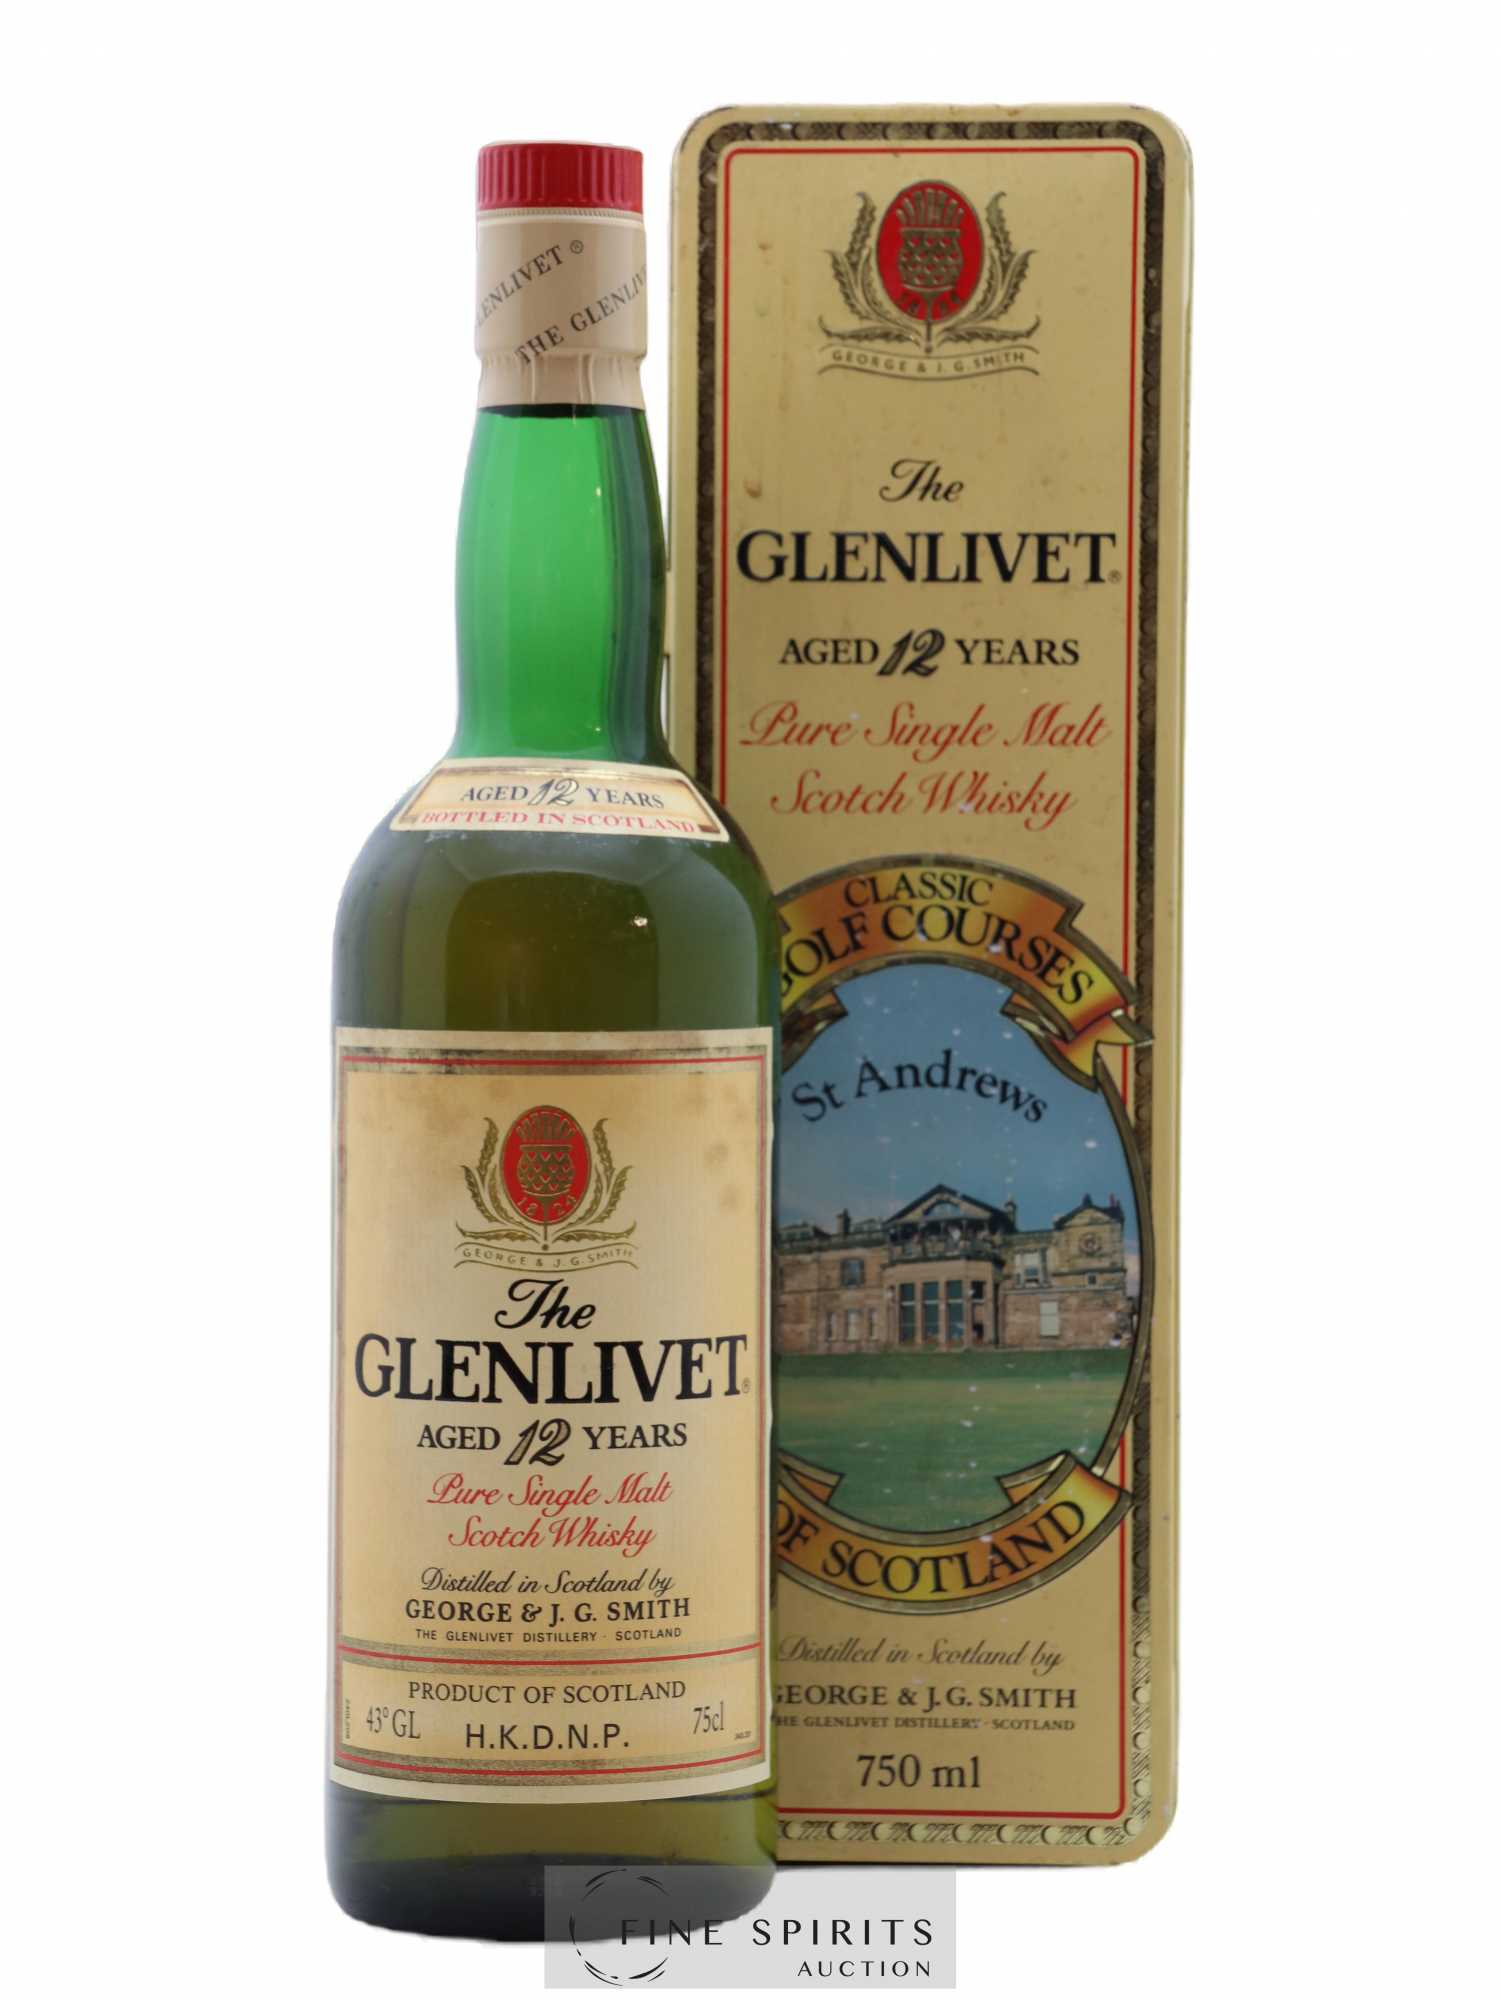 Glenlivet (The) 12 years Of. H.K.D.N.P.